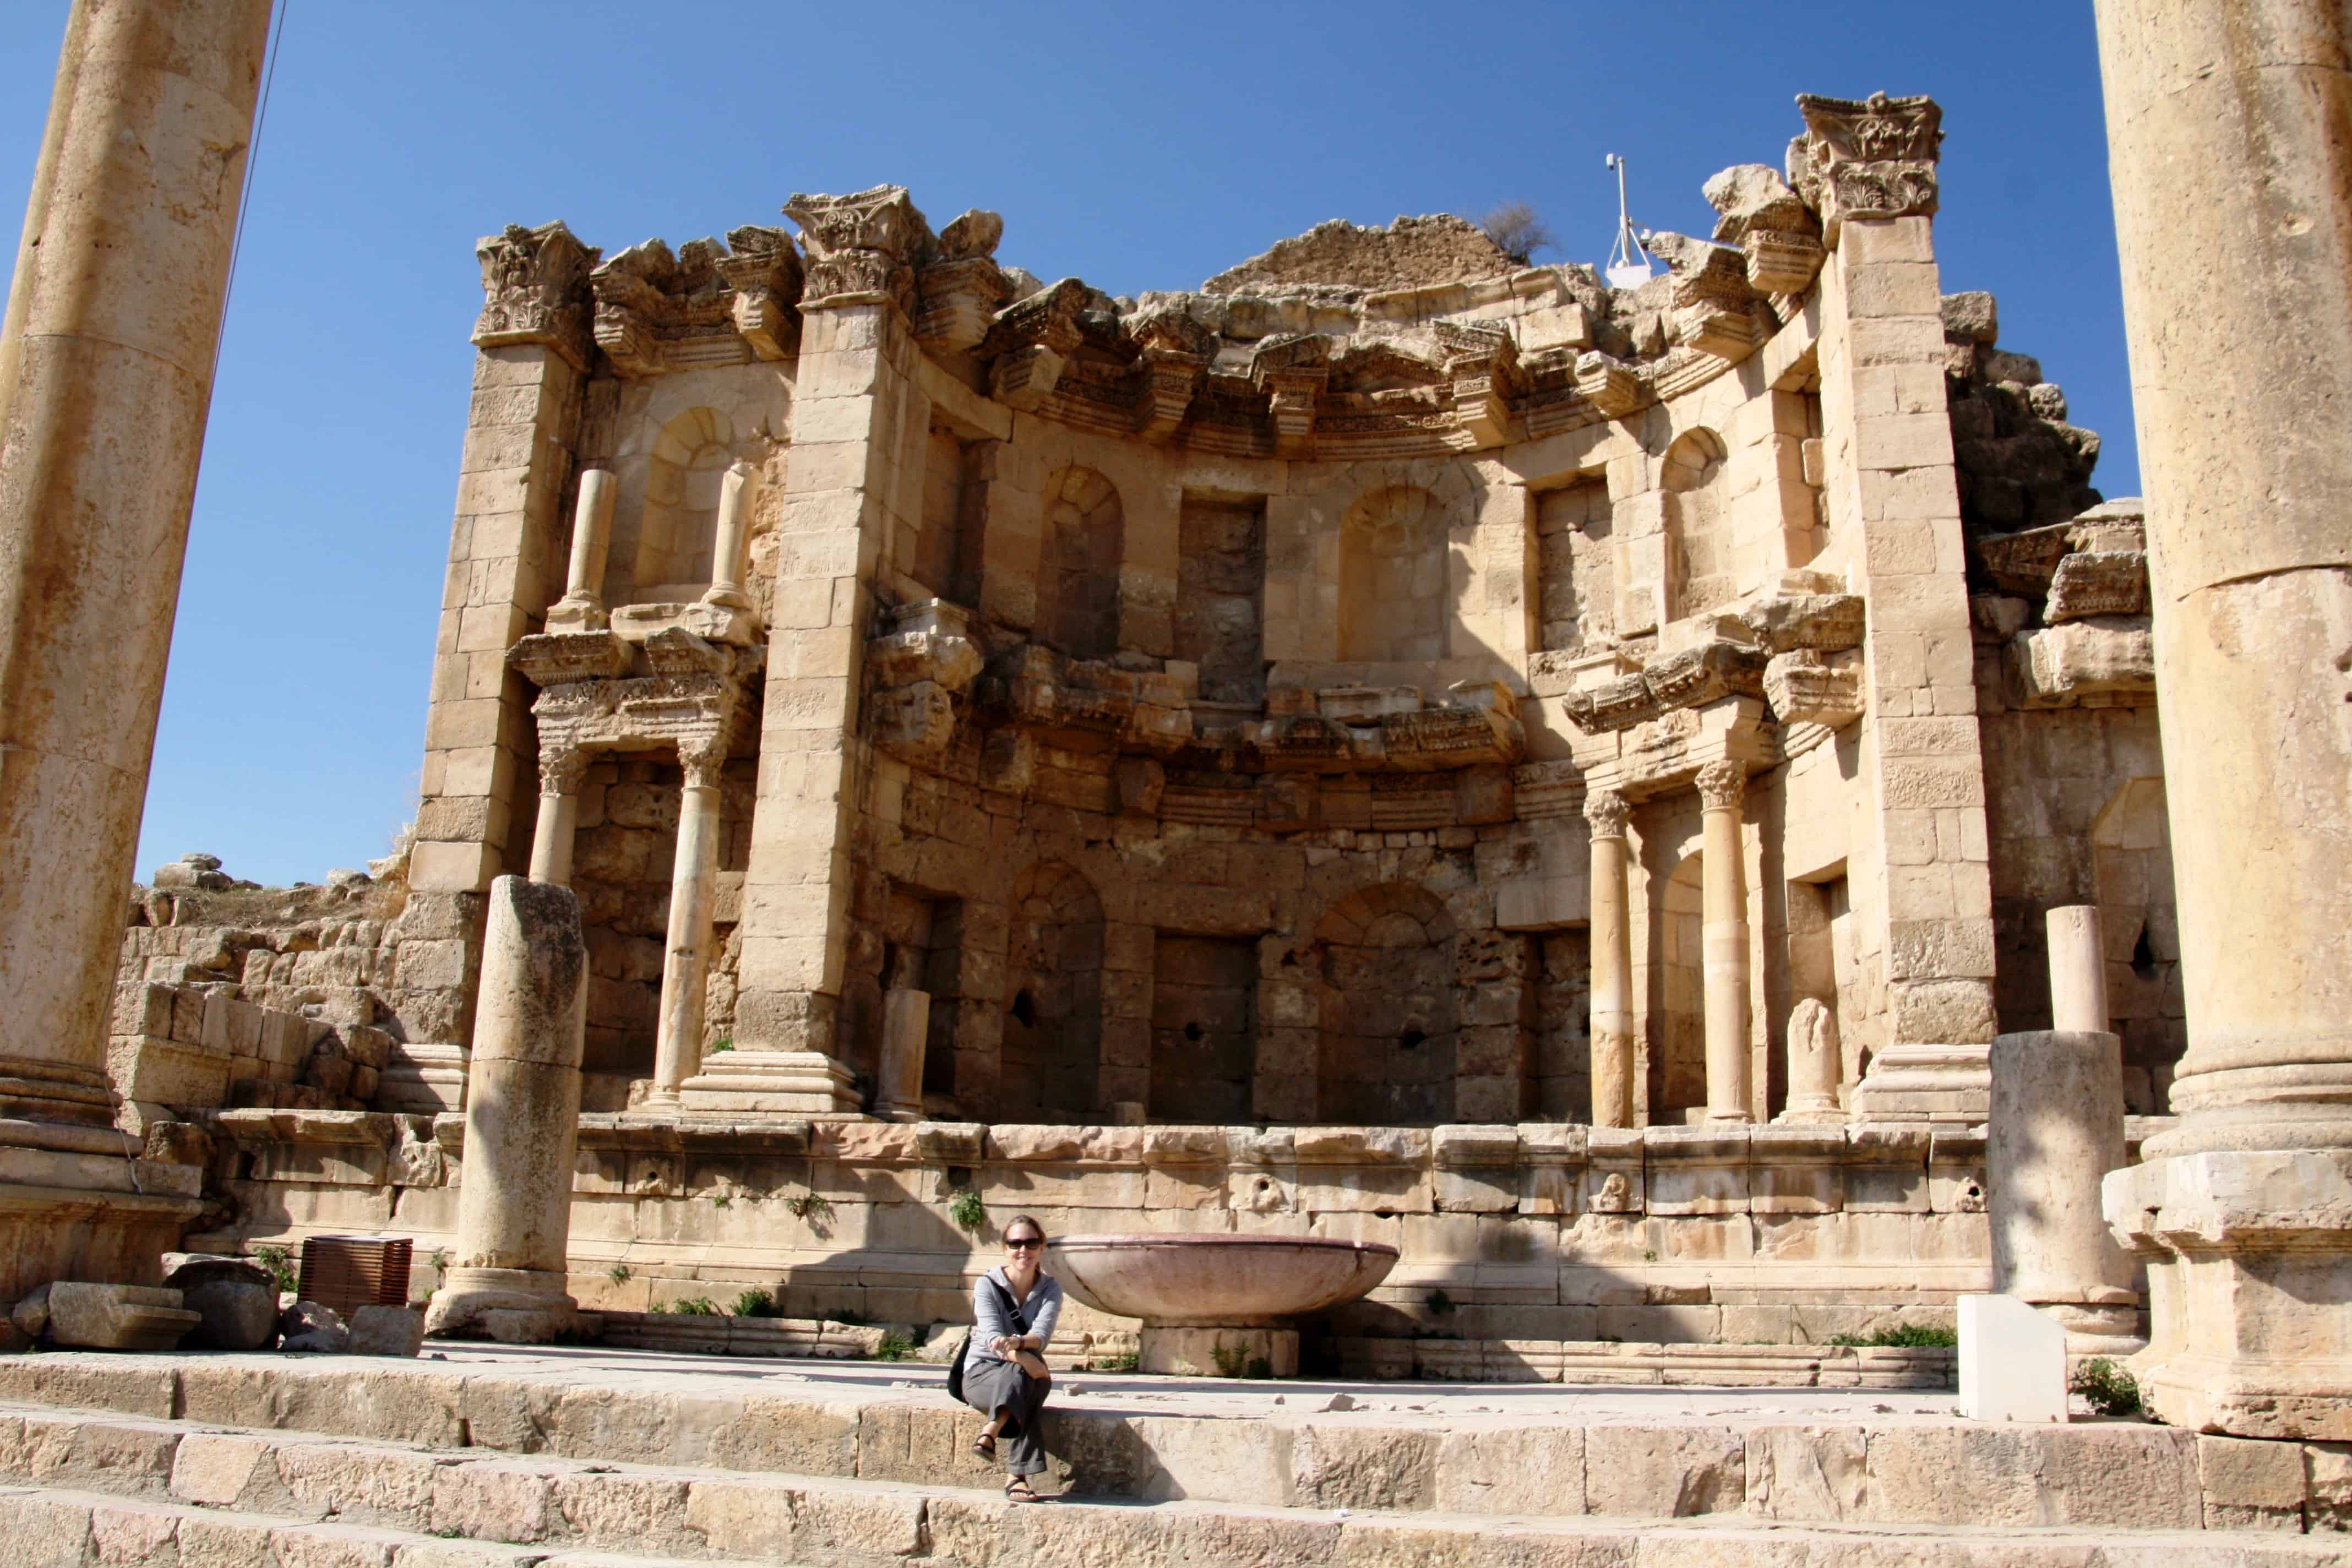 Nymphaeum of Jerash